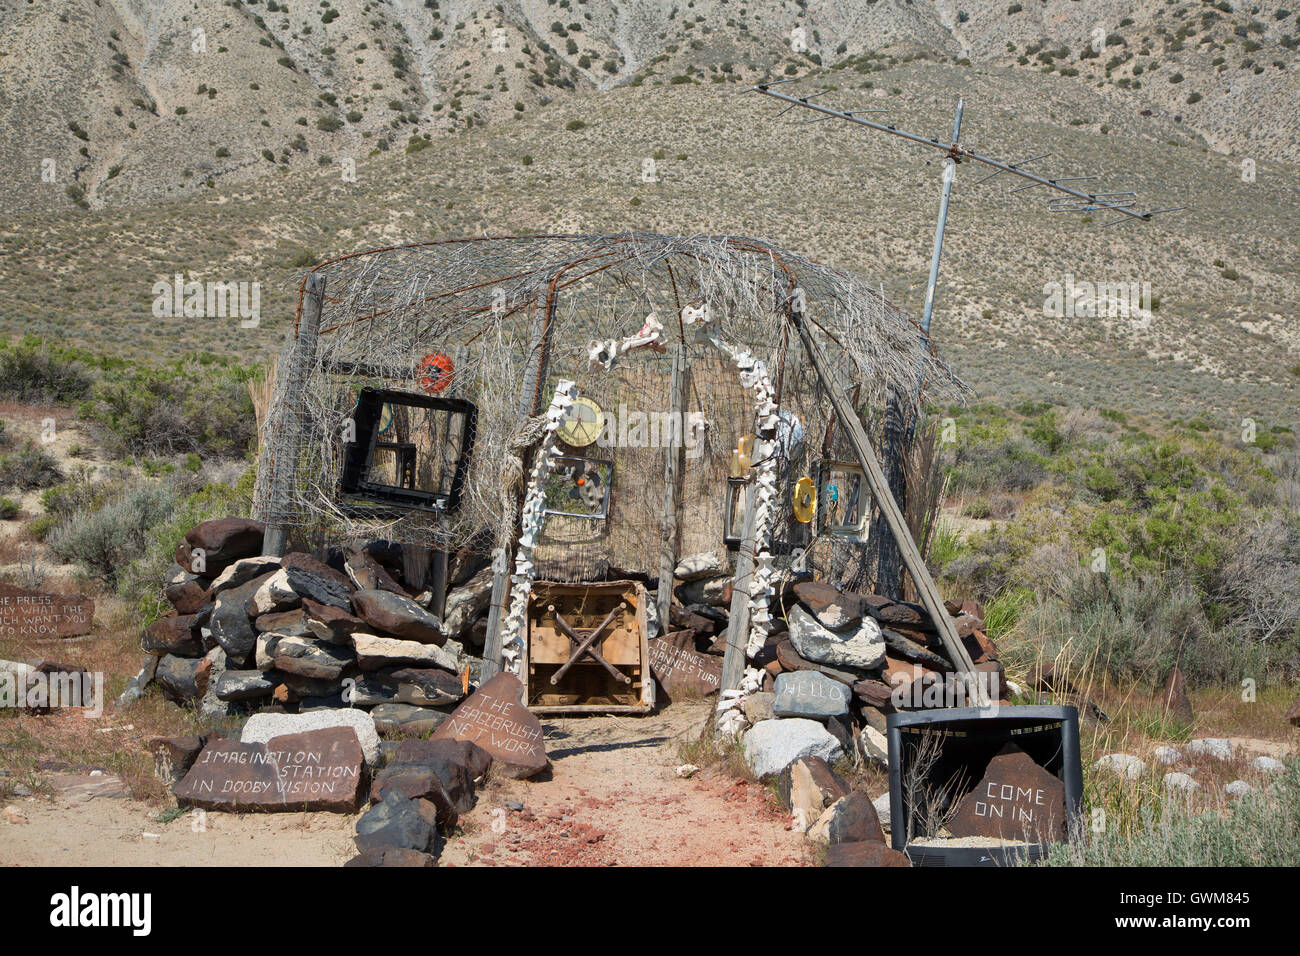 The Desert Broadcasting System sculpture, Guru Road, Gerlach, Nevada Stock Photo